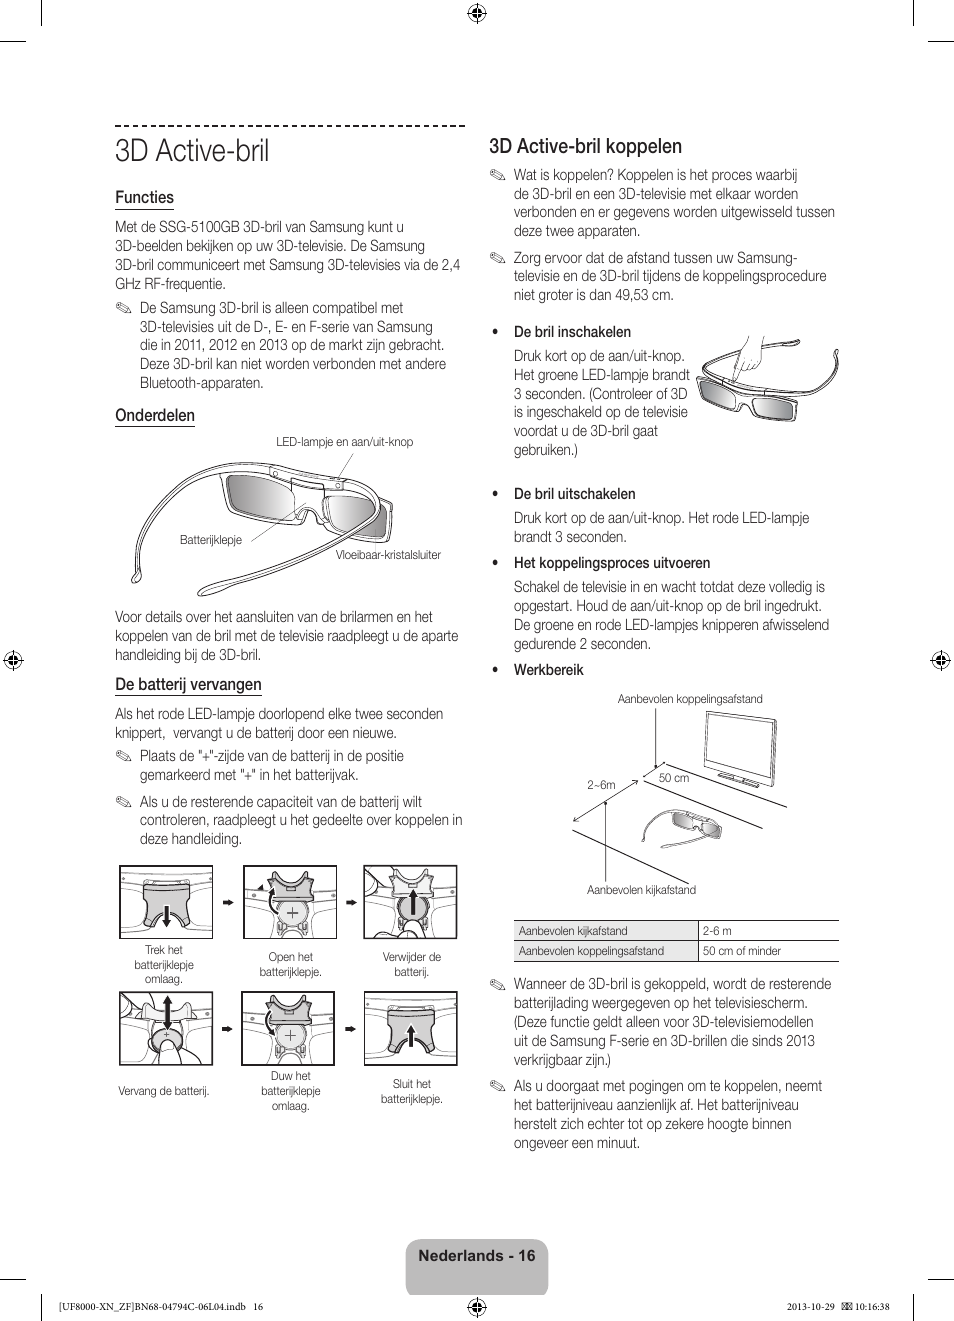 3d active-bril, 3d active-bril koppelen | Samsung UE46F8000SL User Manual |  Page 88 / 97